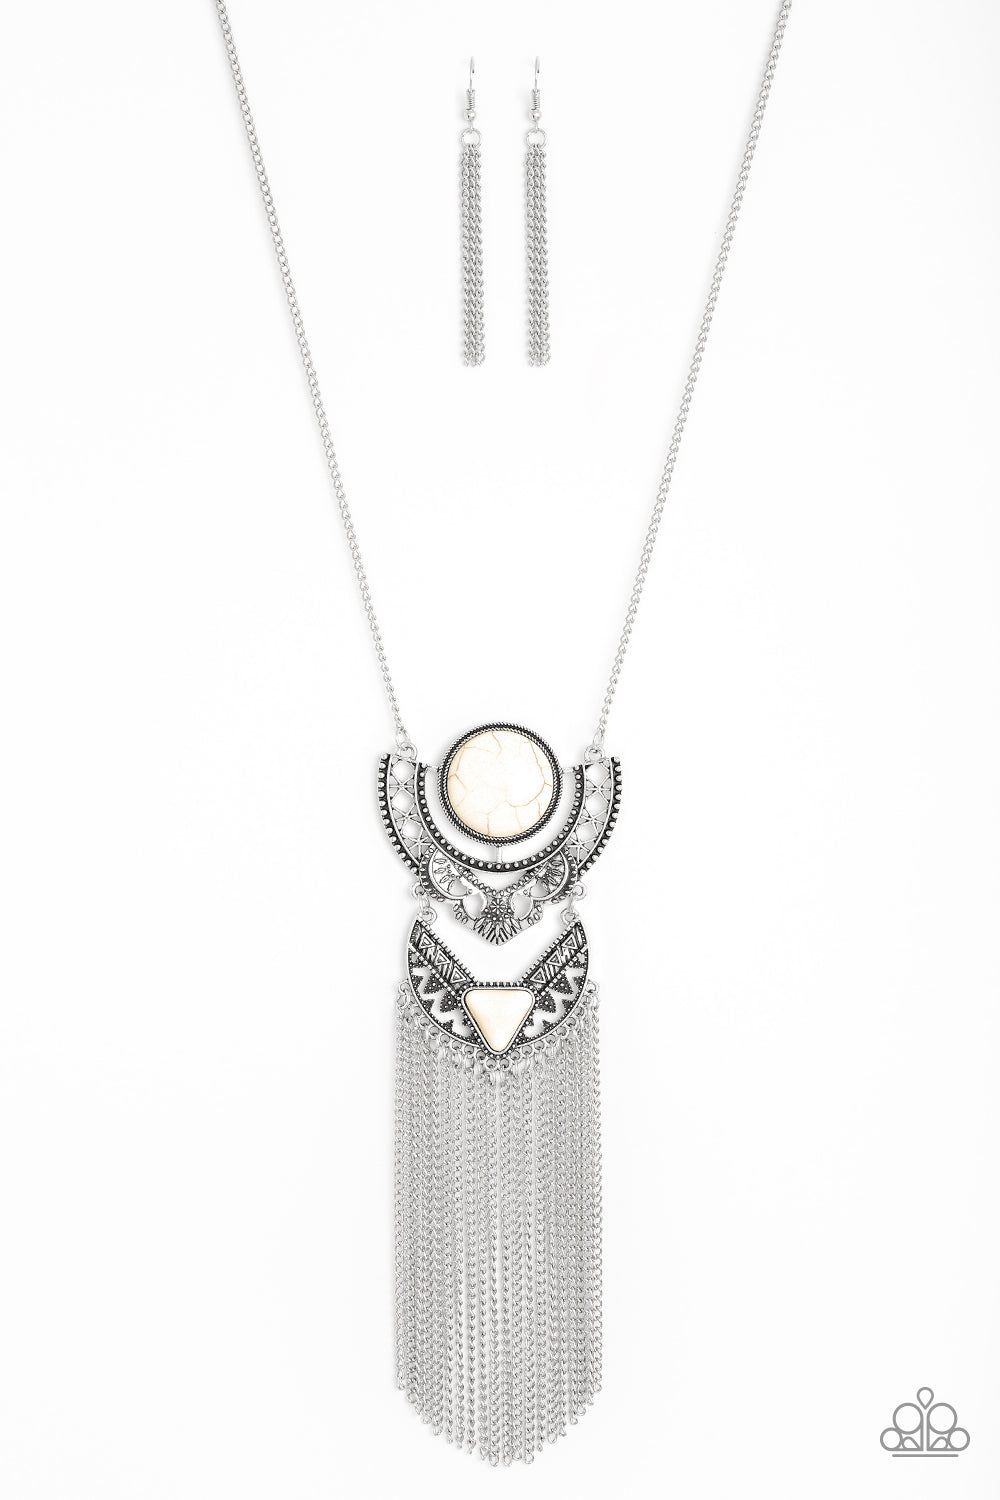 Paparazzi Spirit Trek - White Stone - Necklace - 2019 Convention Exclusive - $5 Jewelry With Ashley Swint